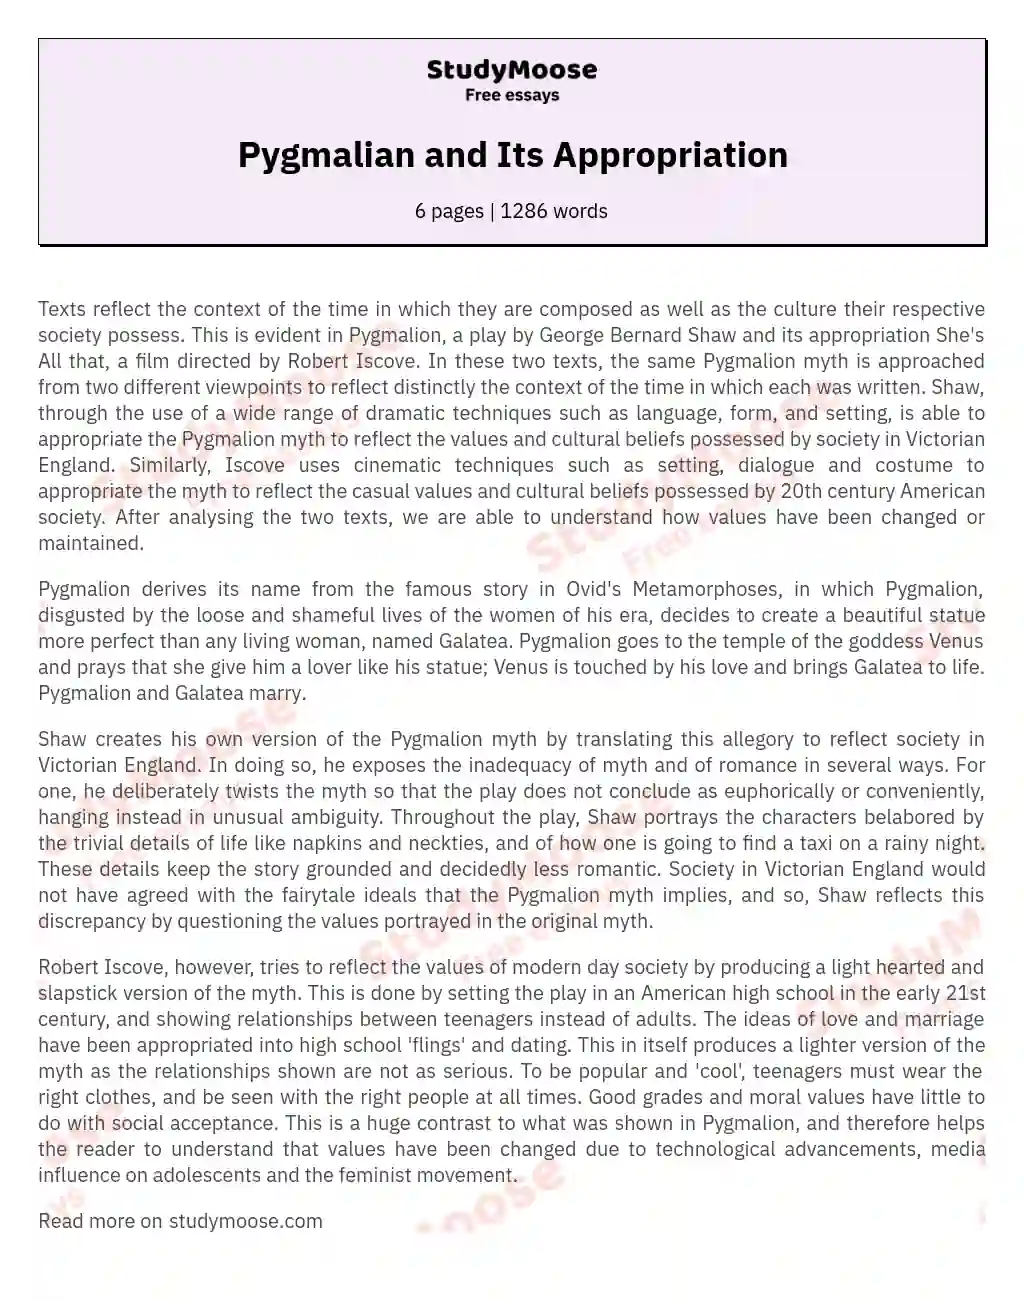 essay about pygmalion